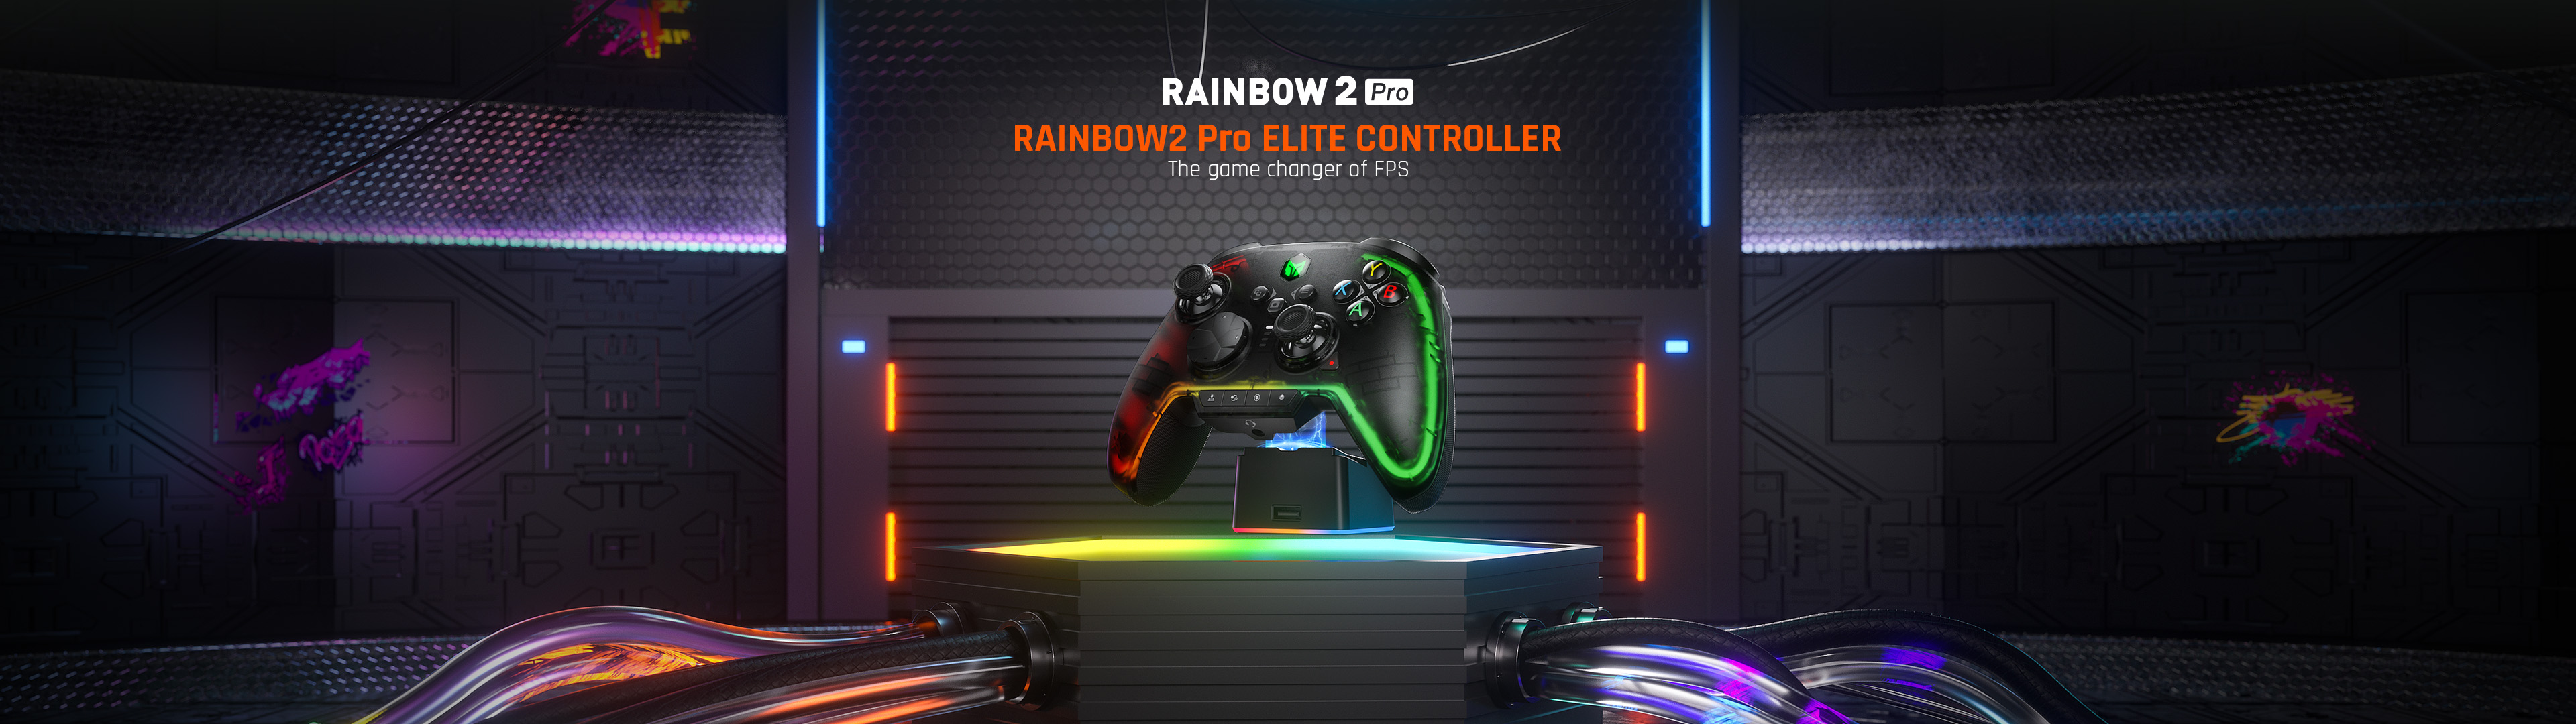 Rainbow 2 Pro   BIGBIG WON